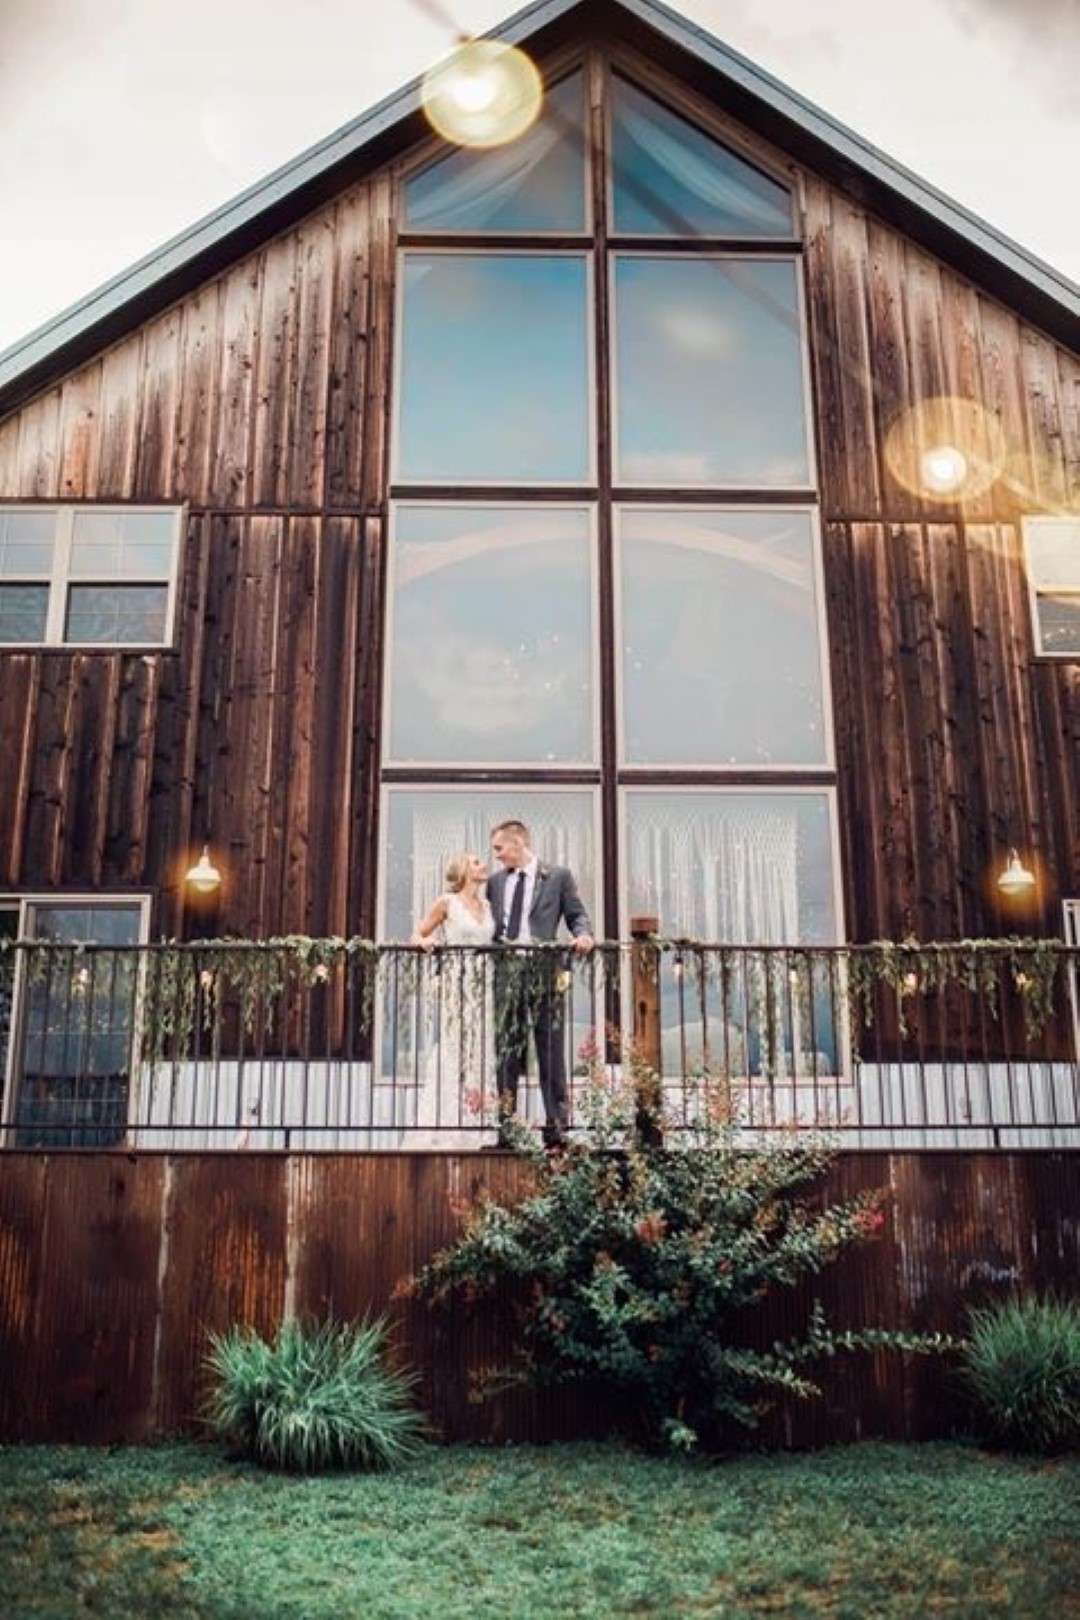 Weathered Wisdom Barn - Springfield Weddings Venues